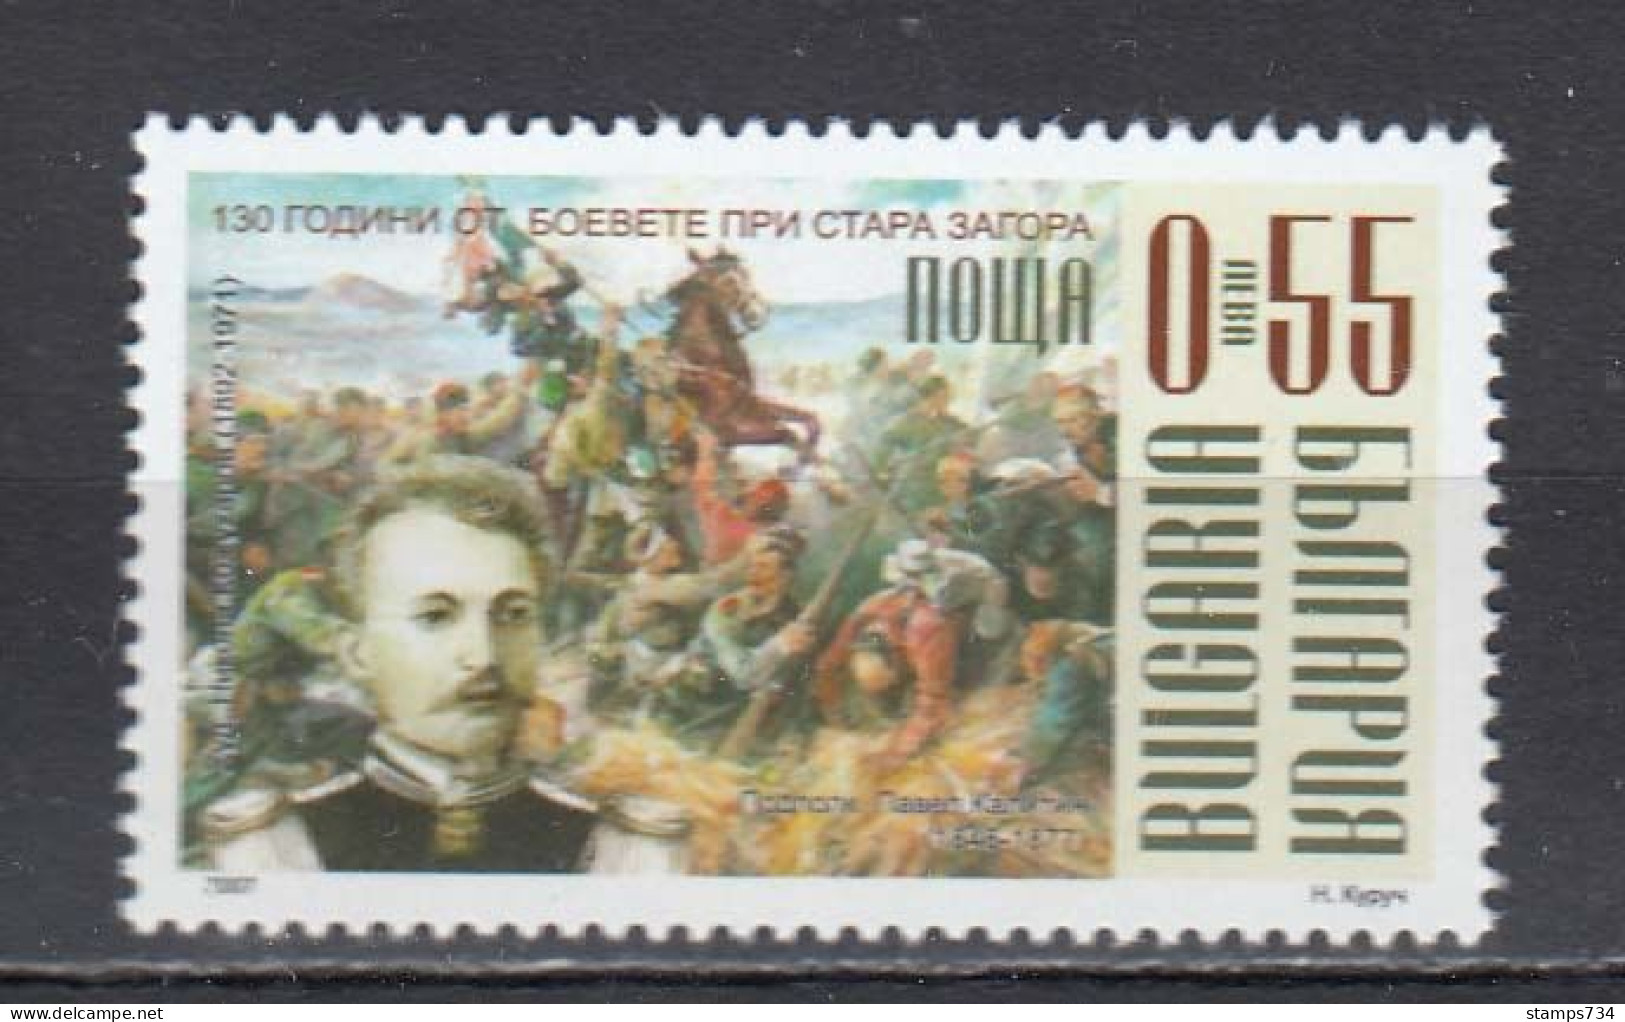 Bulgaria 2007 - 130th Anniversary Of The Battle Of Stara Zagora, Mi-Nr. 4818, MNH** - Ungebraucht